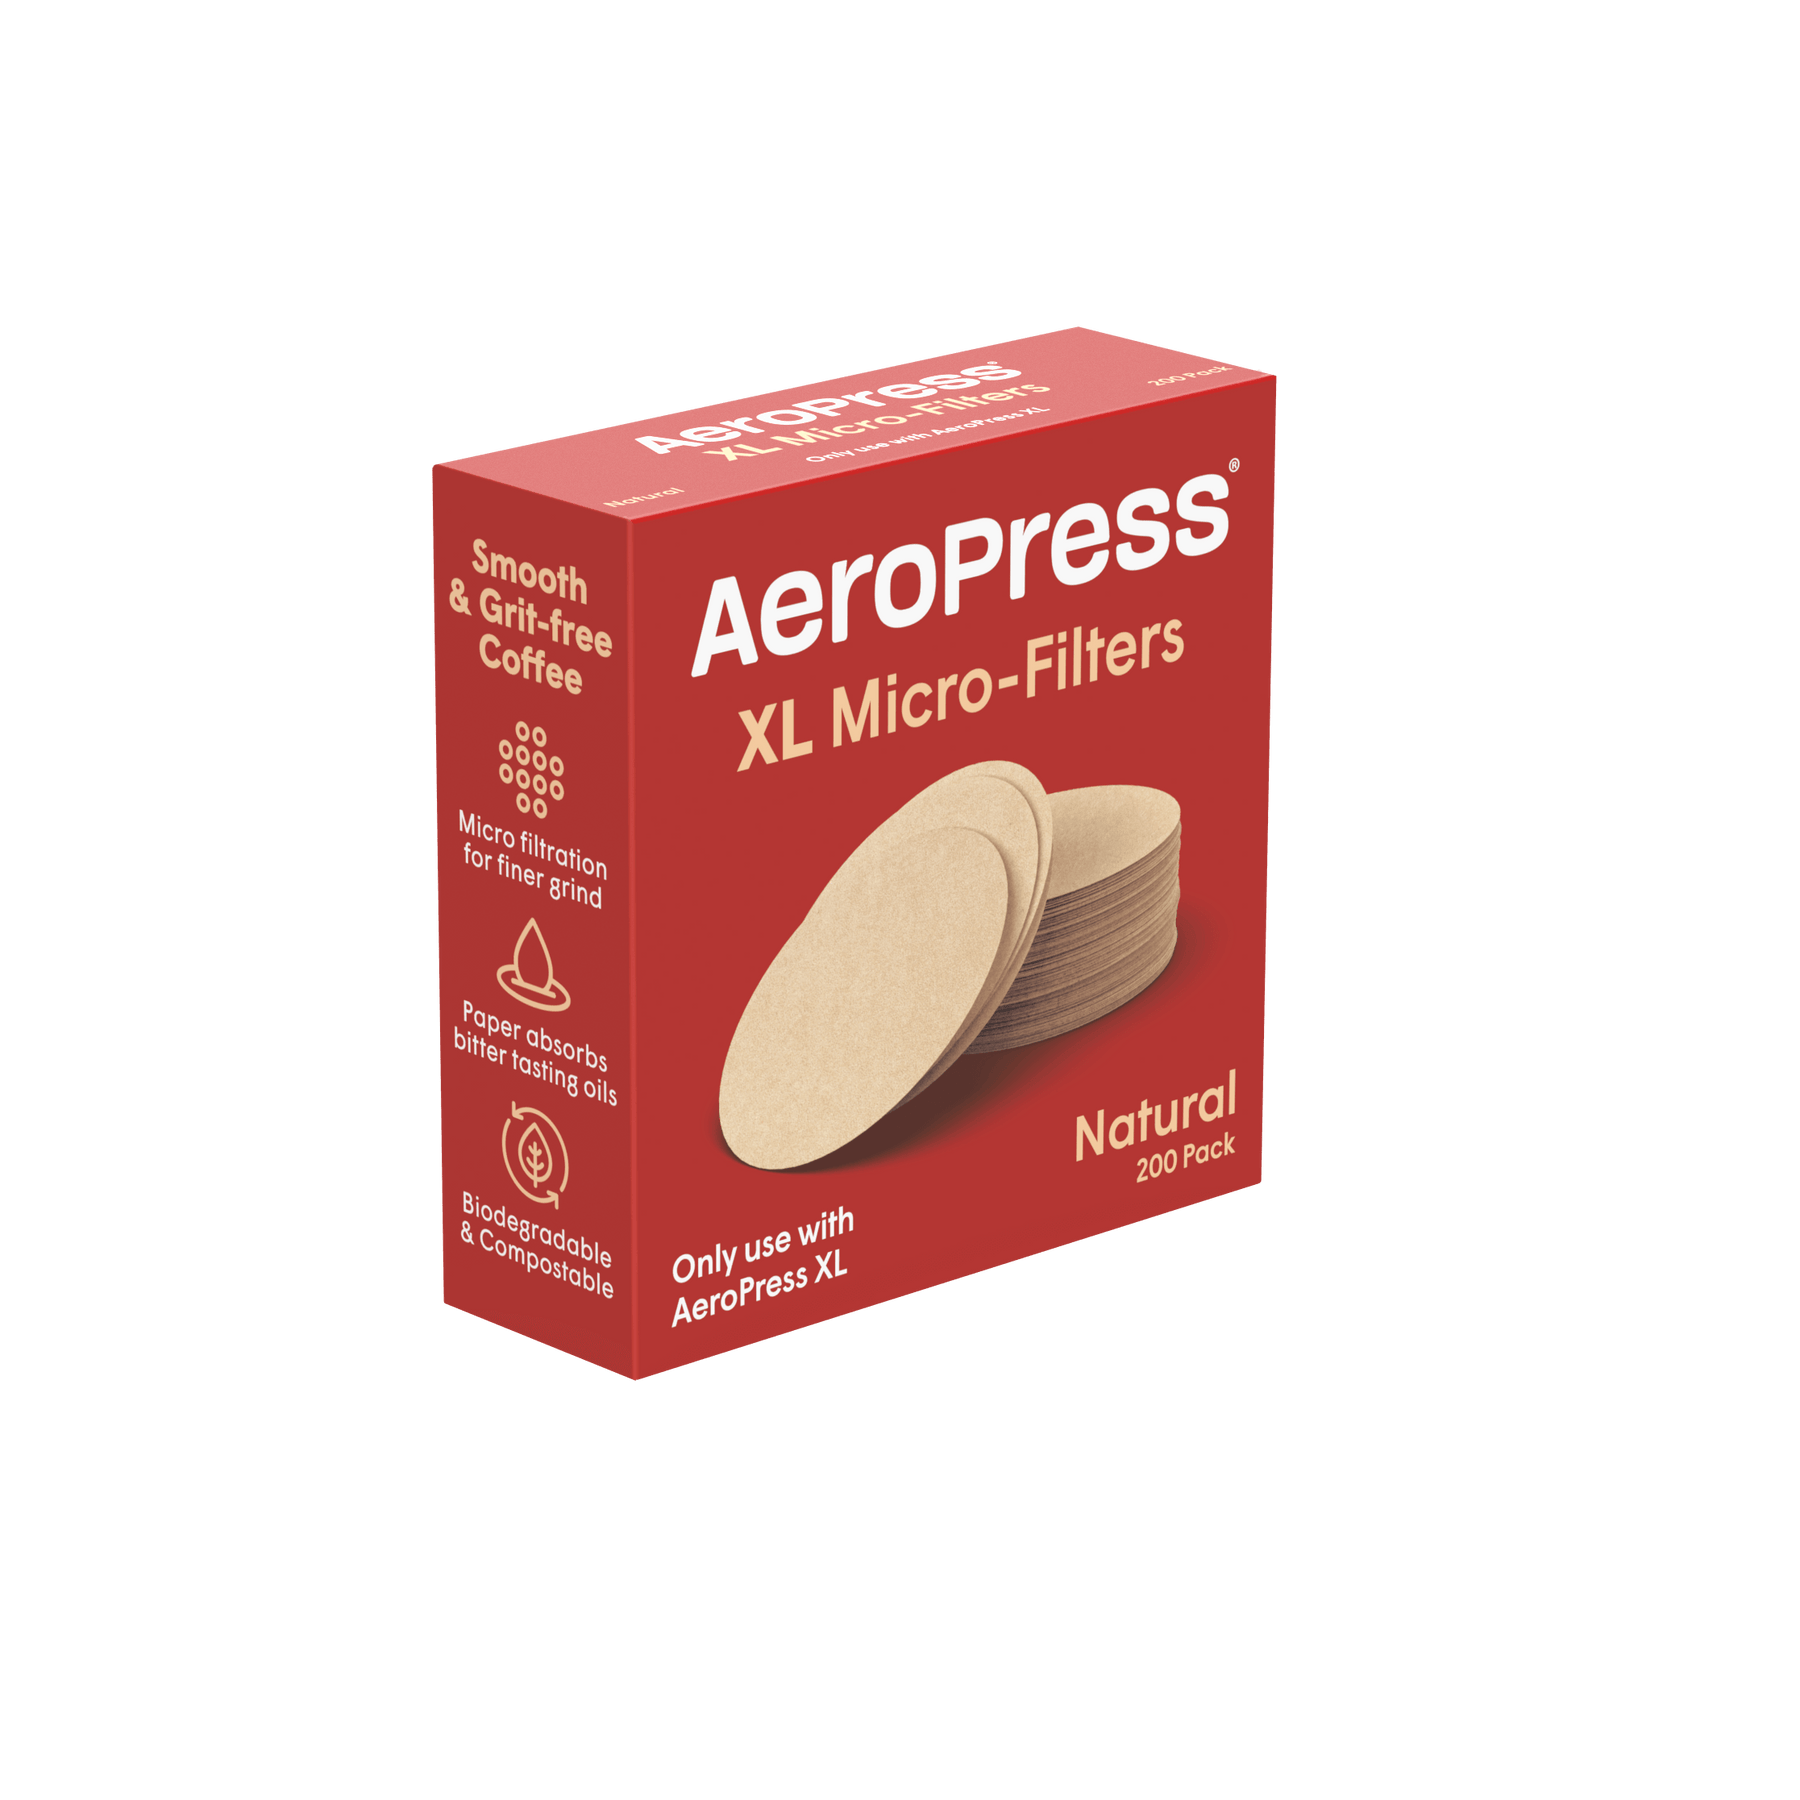 AeroPress XL Micro-Filters 200 Pack - Spoons N Spice